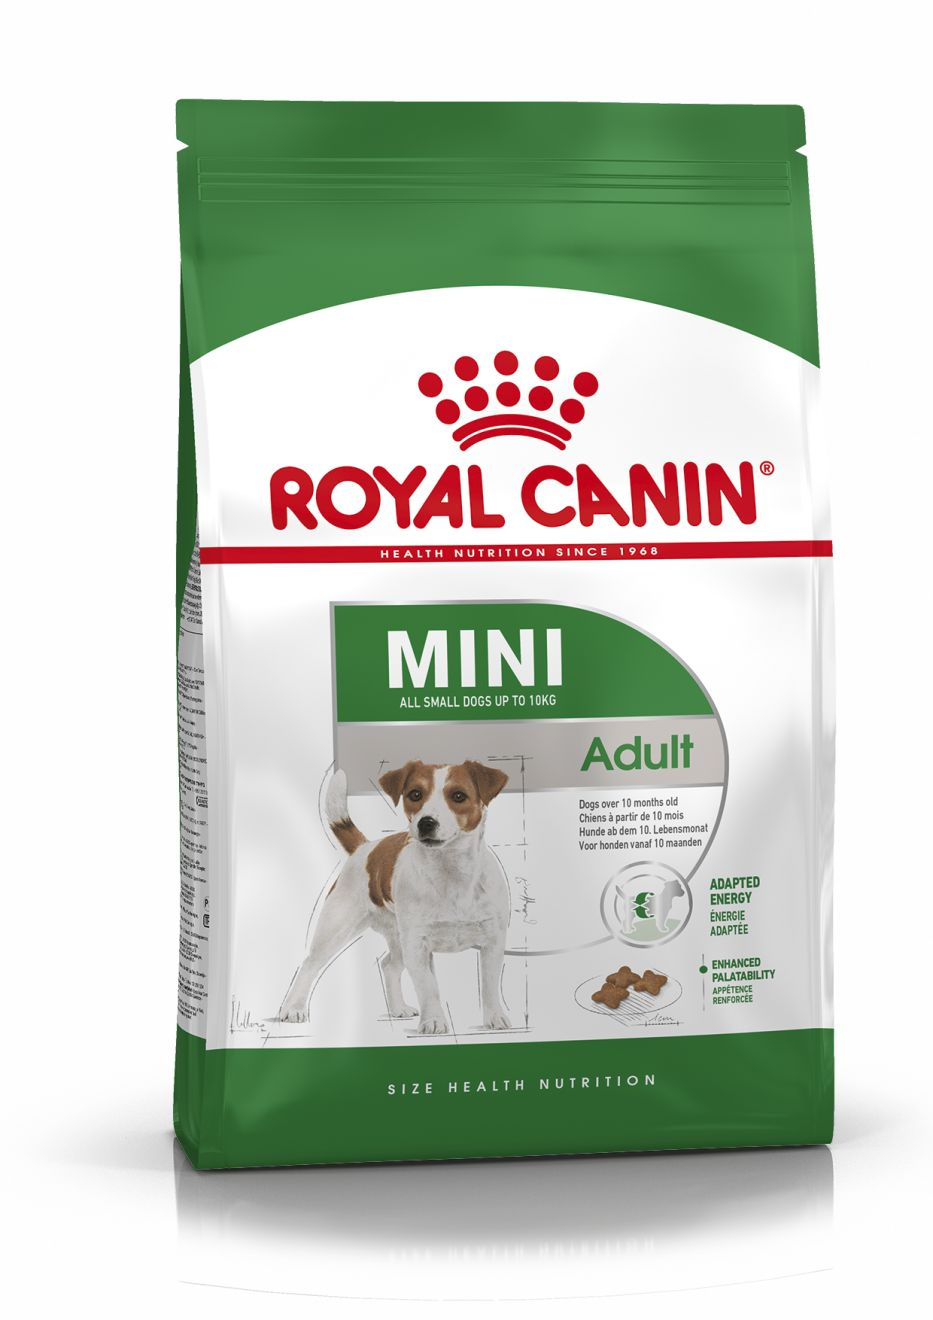 royal canin puppy mini 15kg